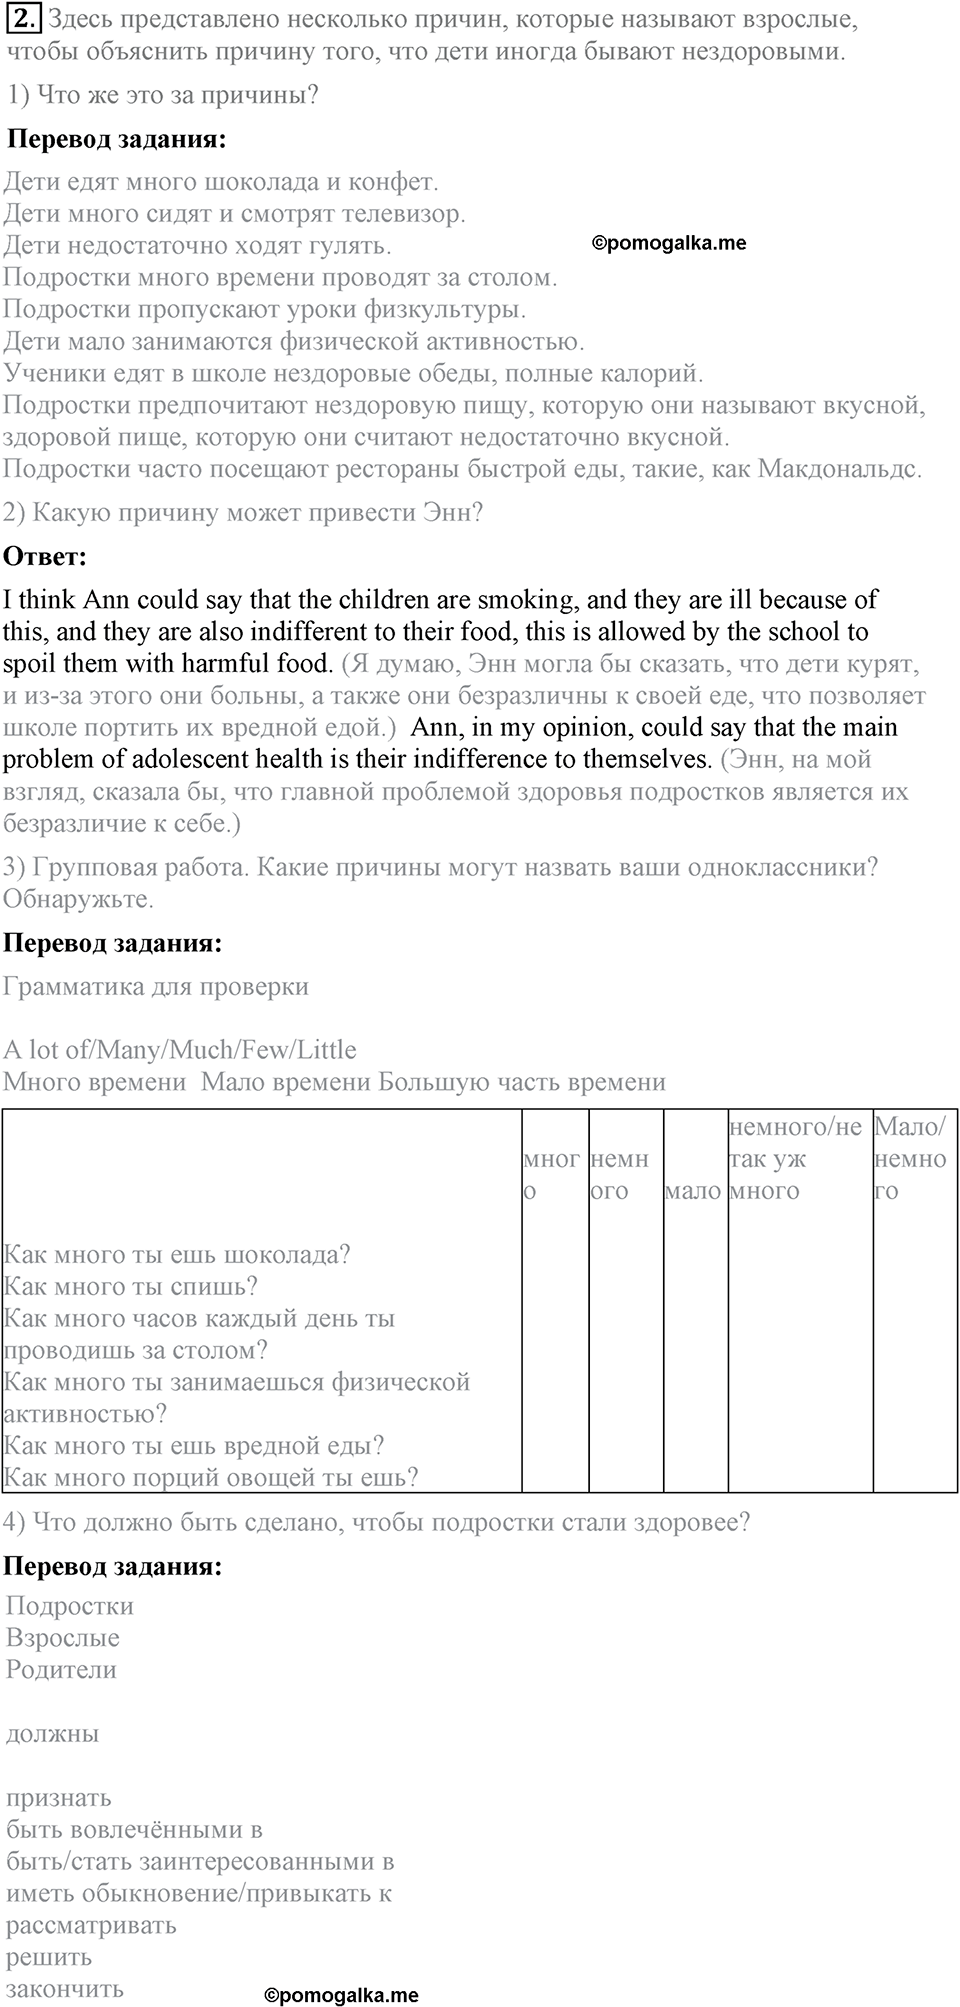 страница 129 lesson 2 номер 2 английский язык 8 класс Кузовлев учебник 2015 год